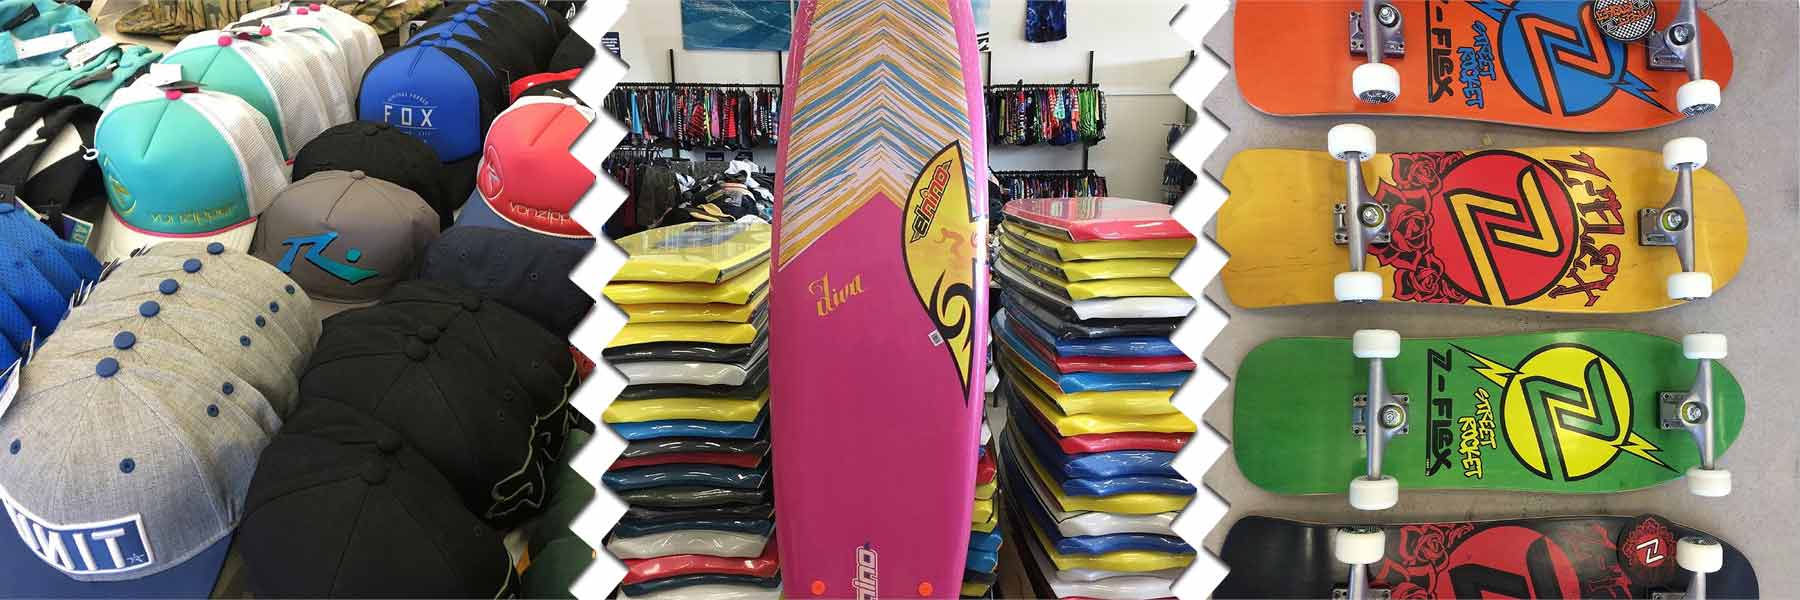 kawana surf outlet cap models and surf board